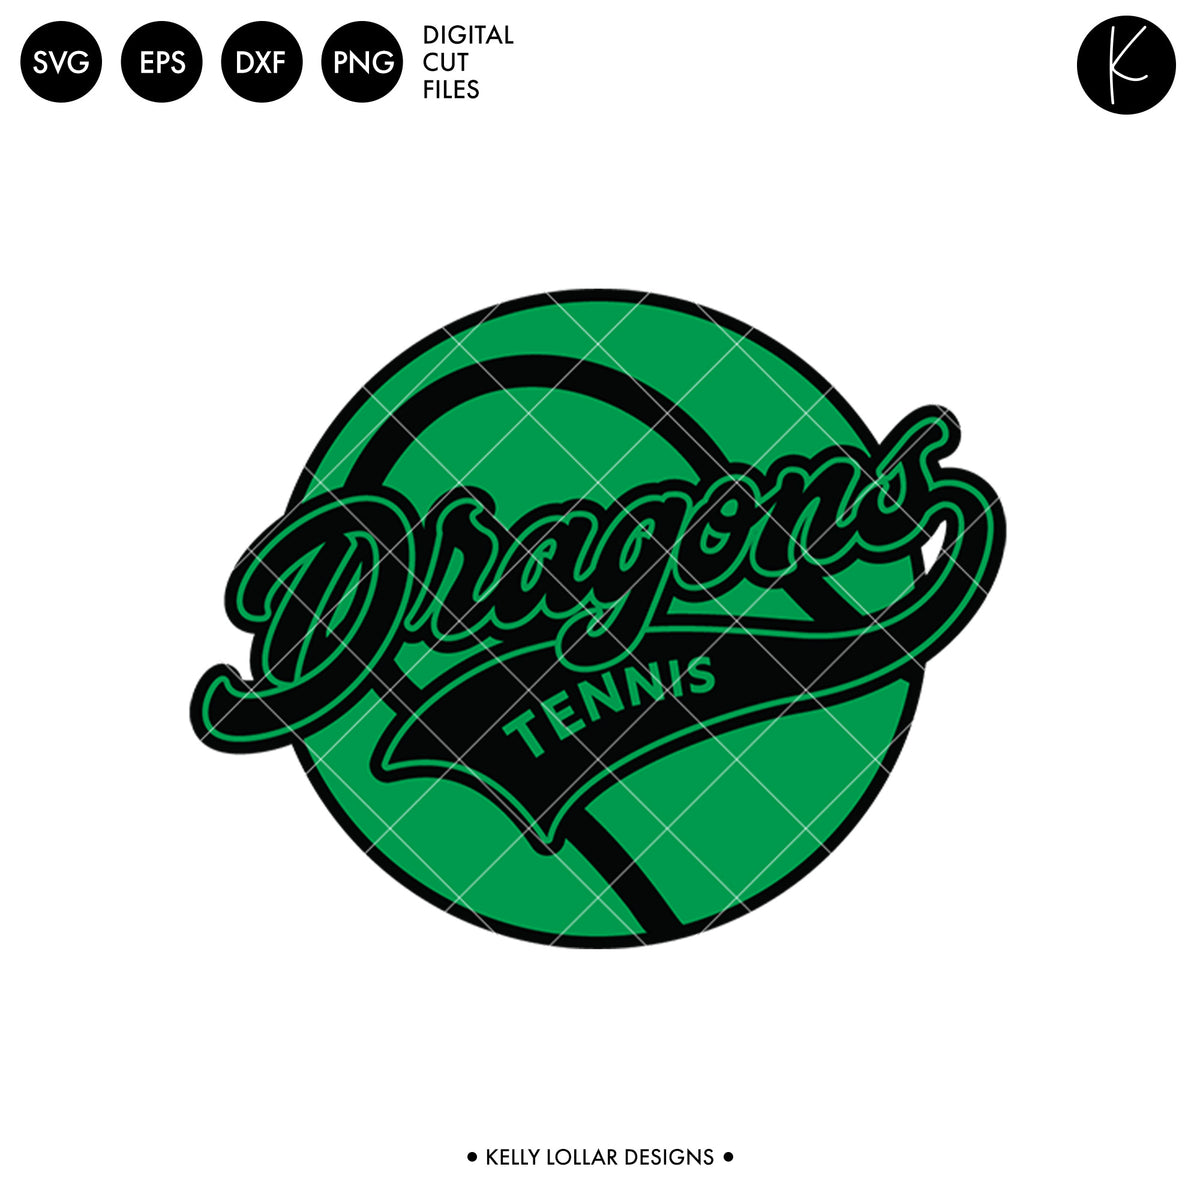 Dragons Tennis Bundle | SVG DXF EPS PNG Cut Files